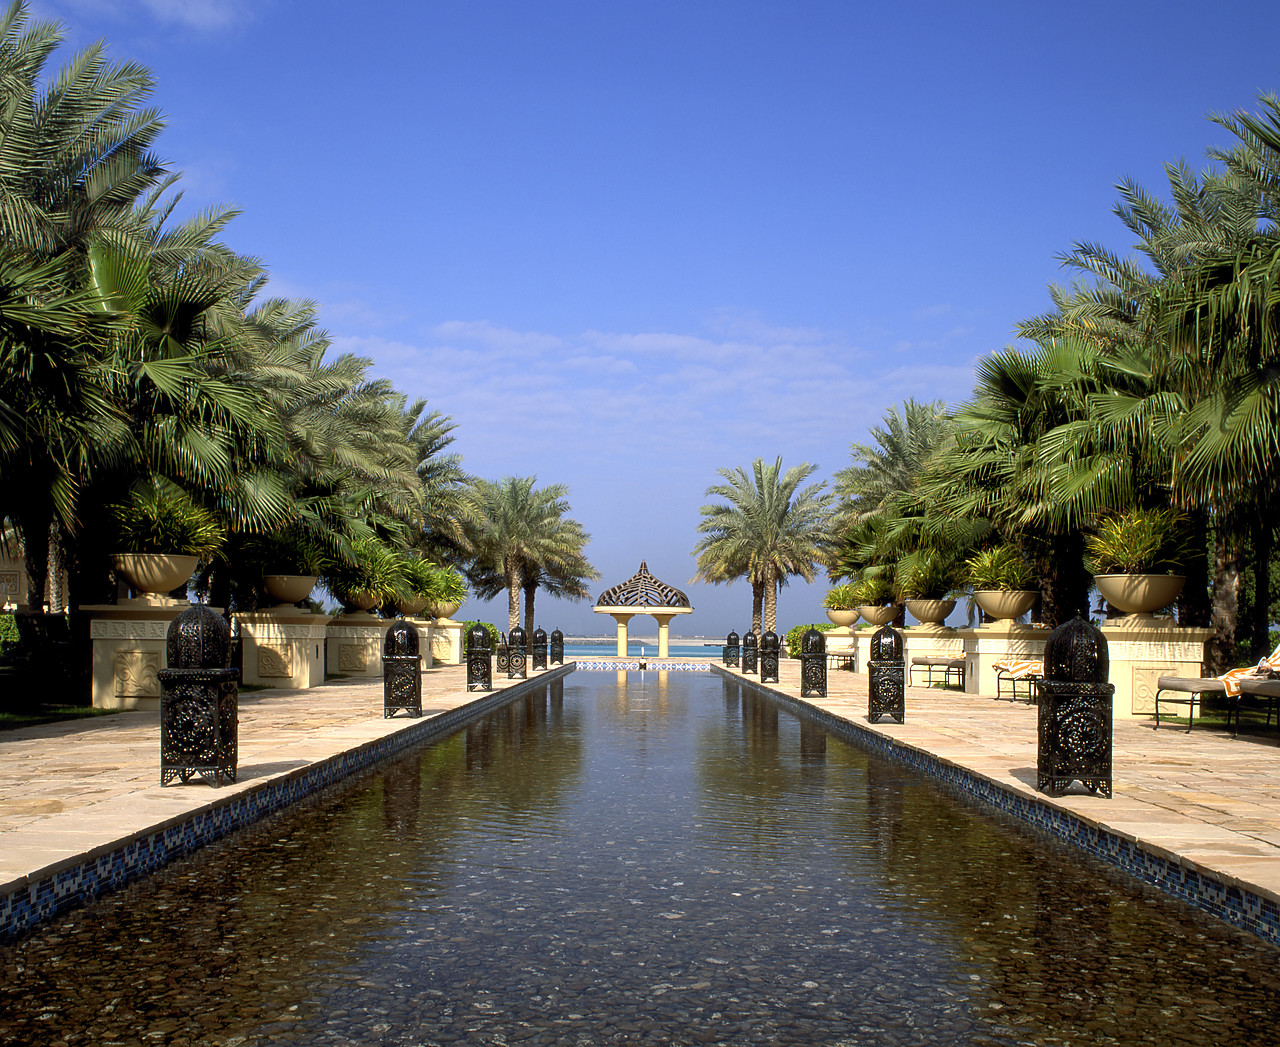 #050035-1 - Royal Mirage Garden Pool, Dubai, UAE